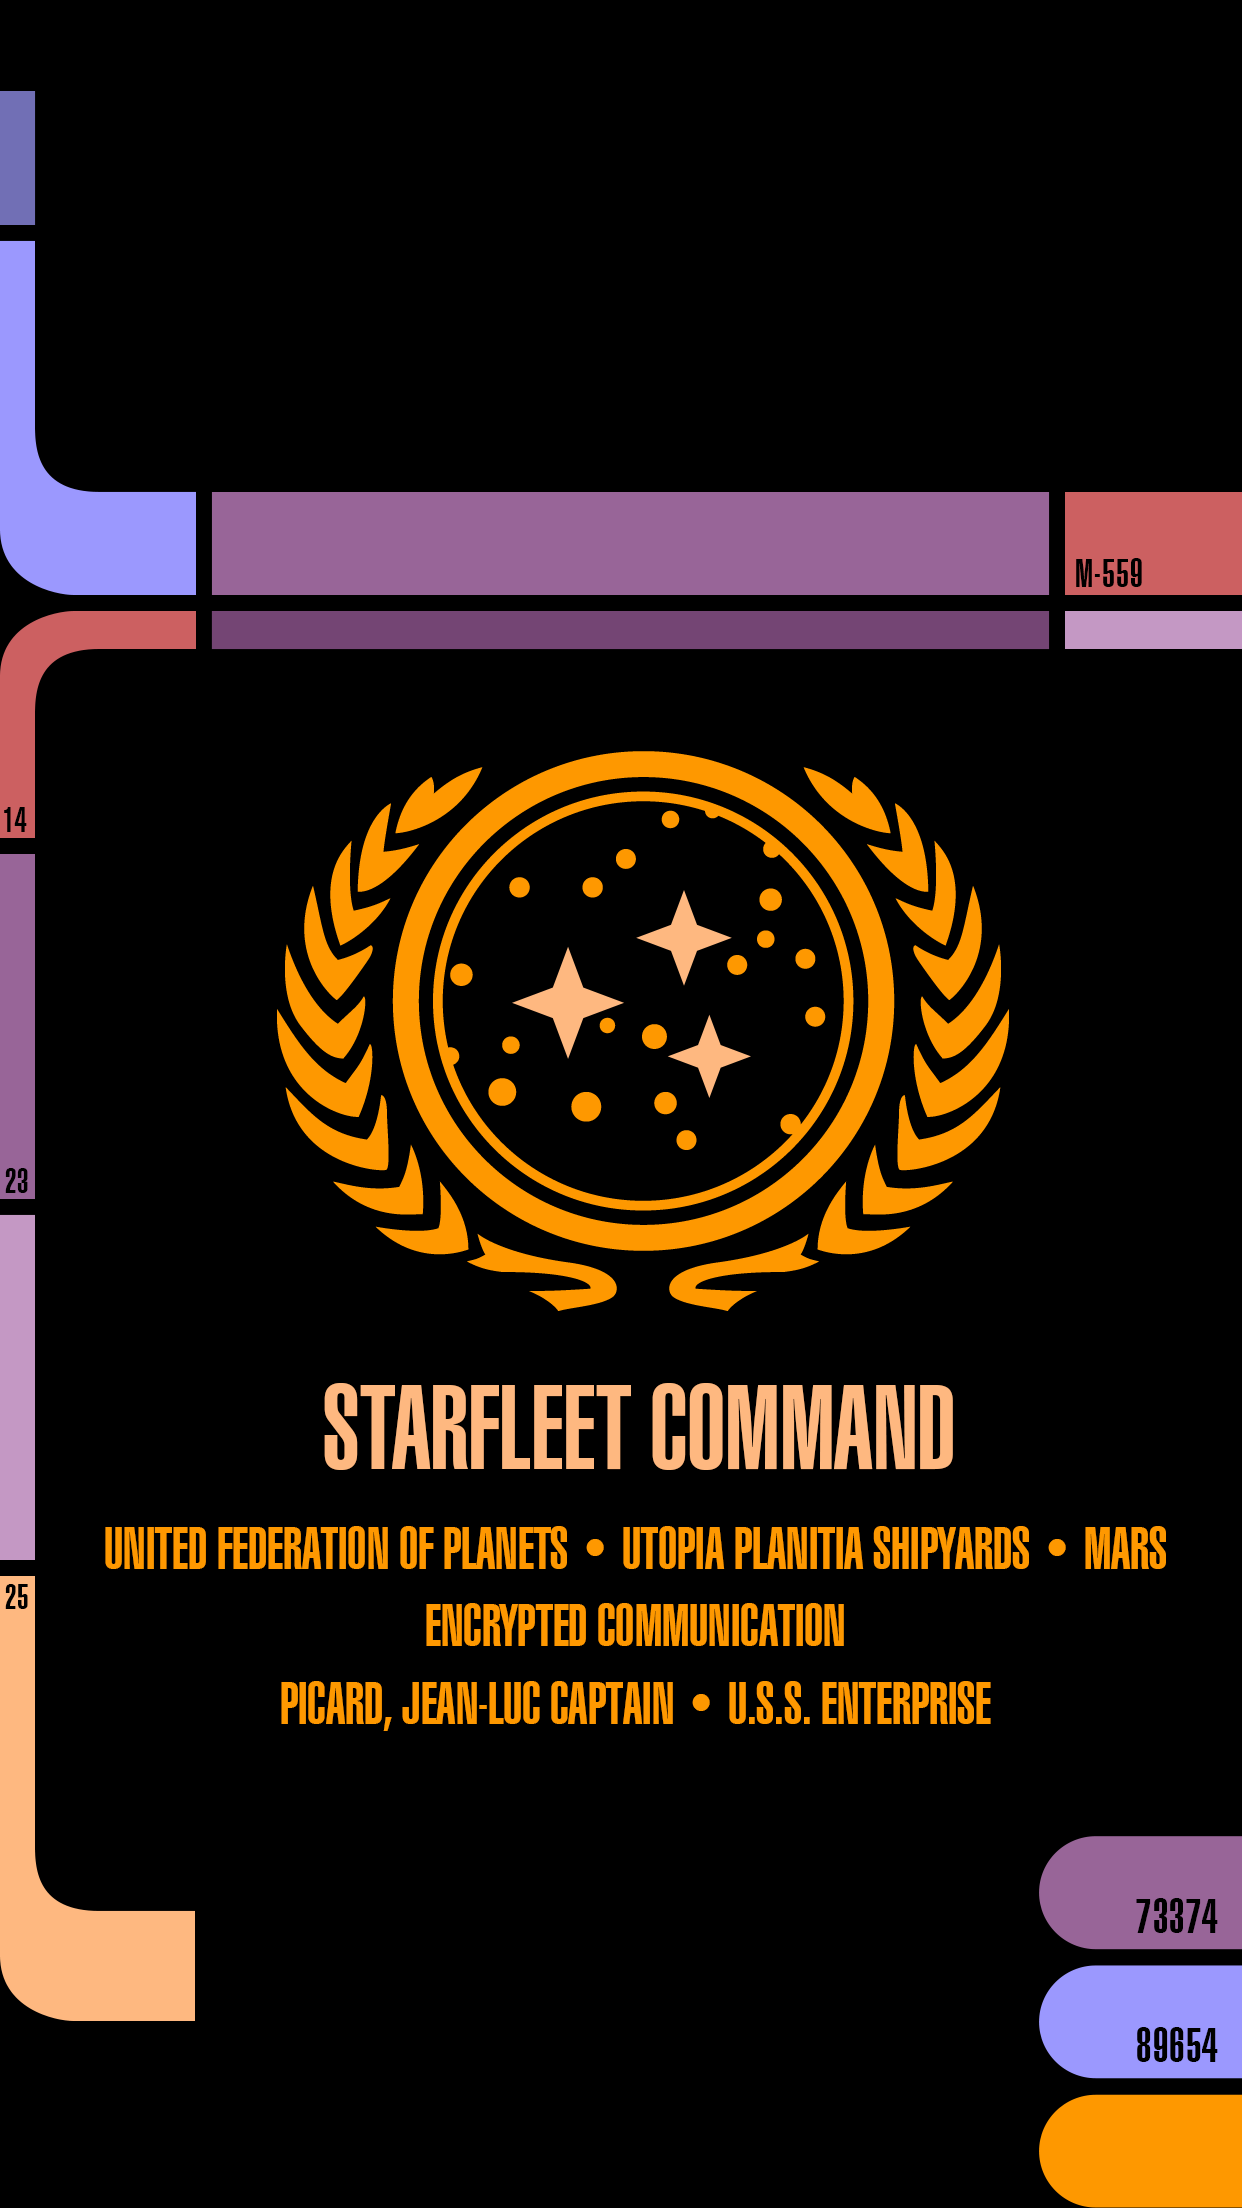 Star Trek Next Gen Wallpaper For iPhone Ged